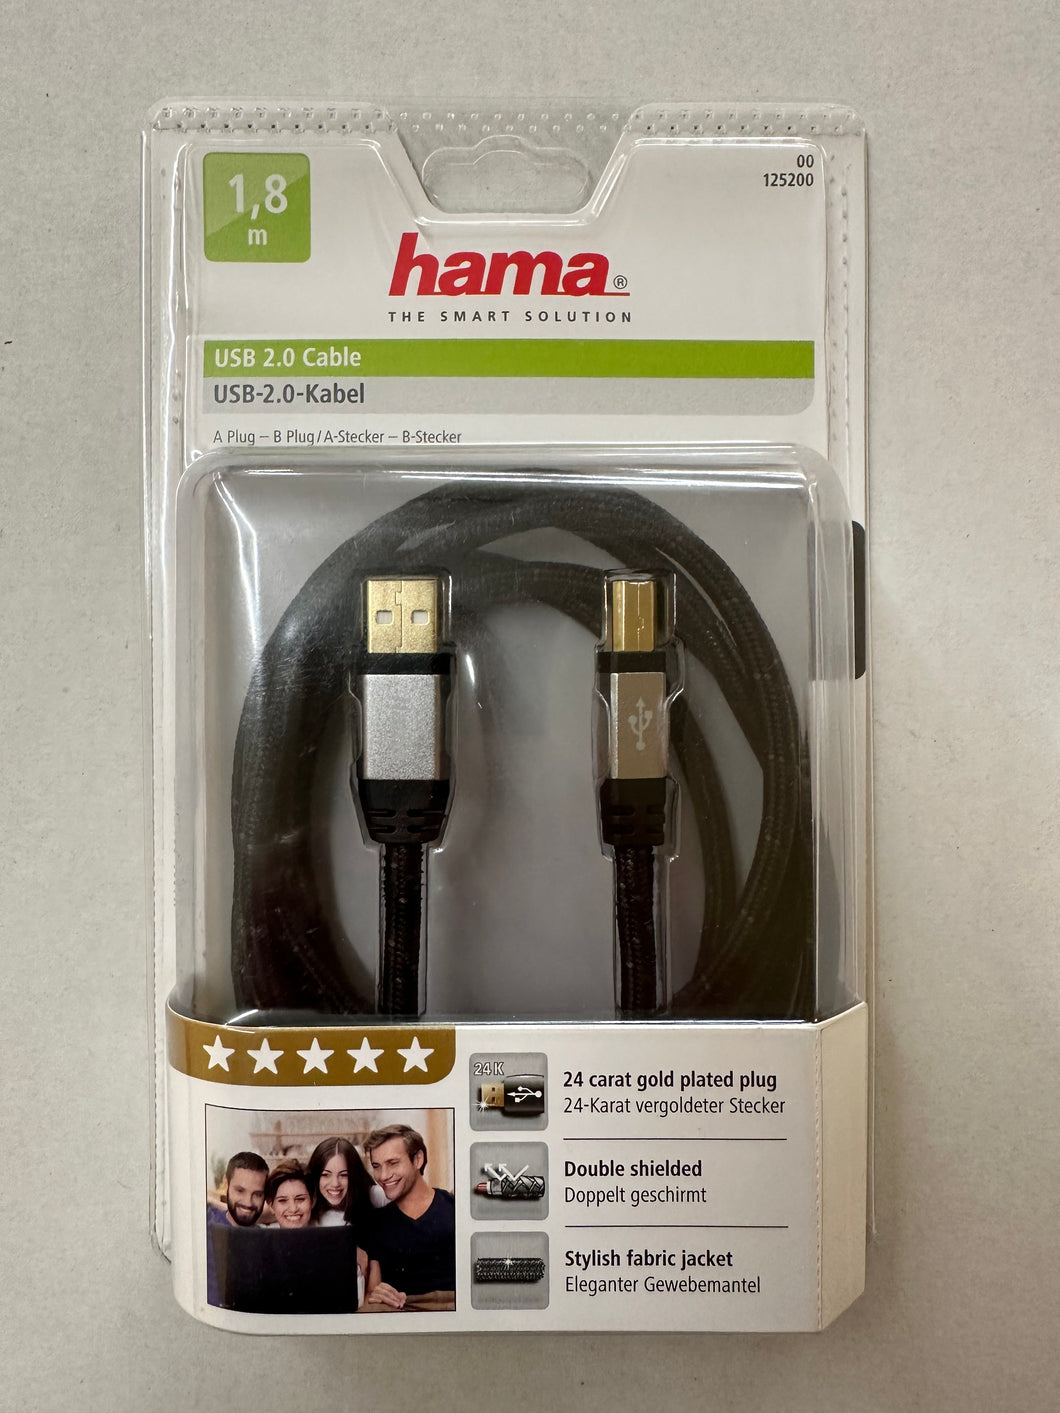 HAMA USB-2.0-Kabel, 24K-vergoldet, doppelt geschirmt, Gewebemantel, 1,80 m (00125200) (Druckerkabel)